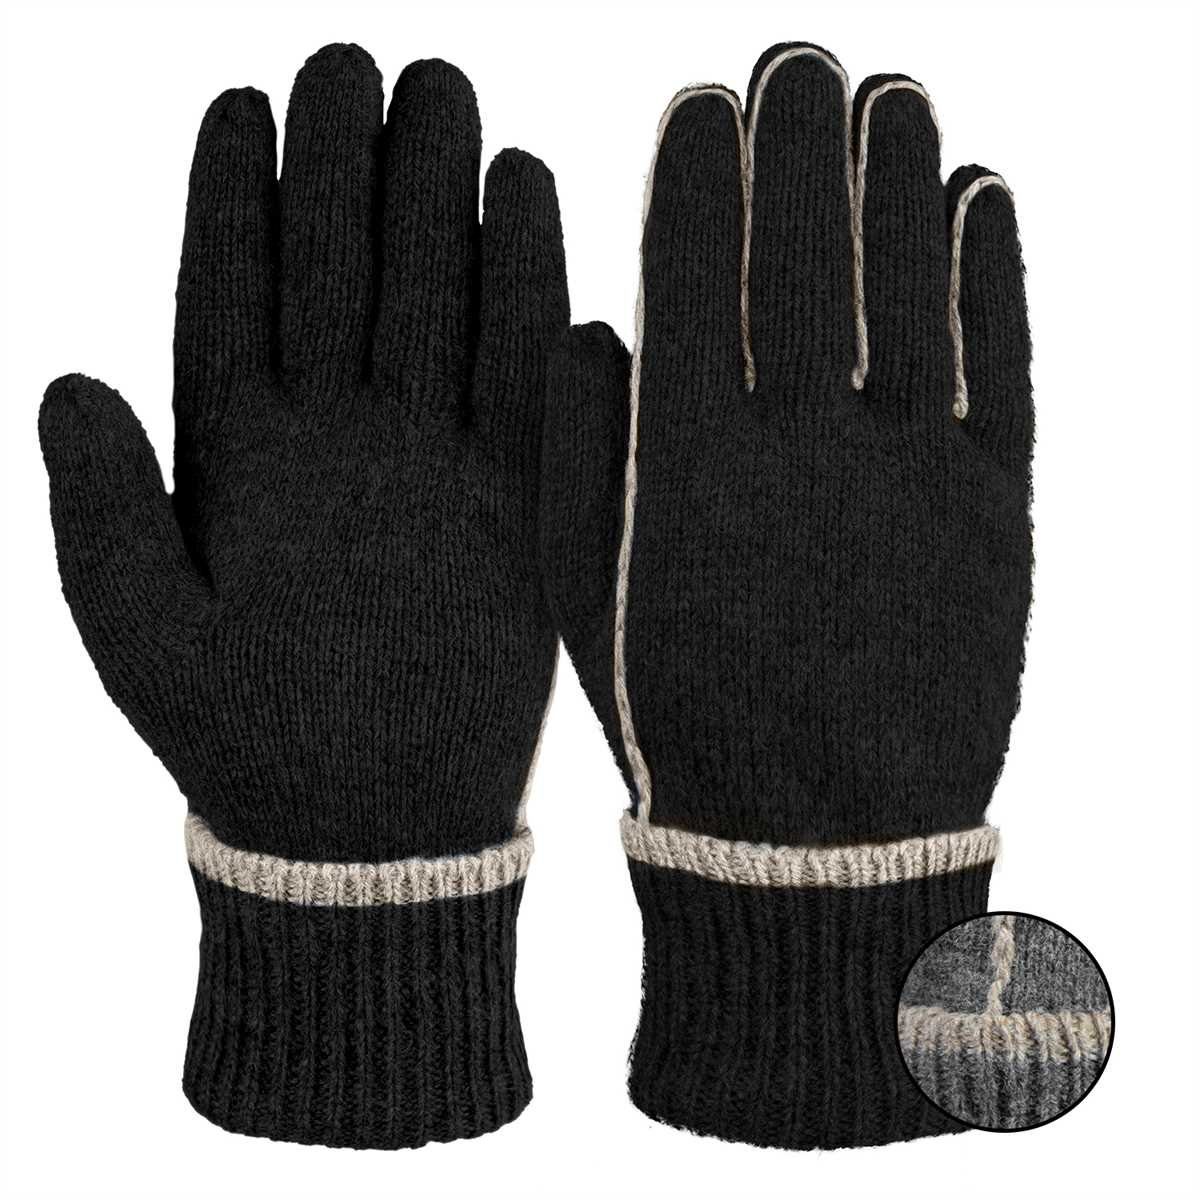 Tarjane Strickhandschuhe 3M Thinsulate Wollhandschuhe Unisex Handschuhe Schwarz/Grau